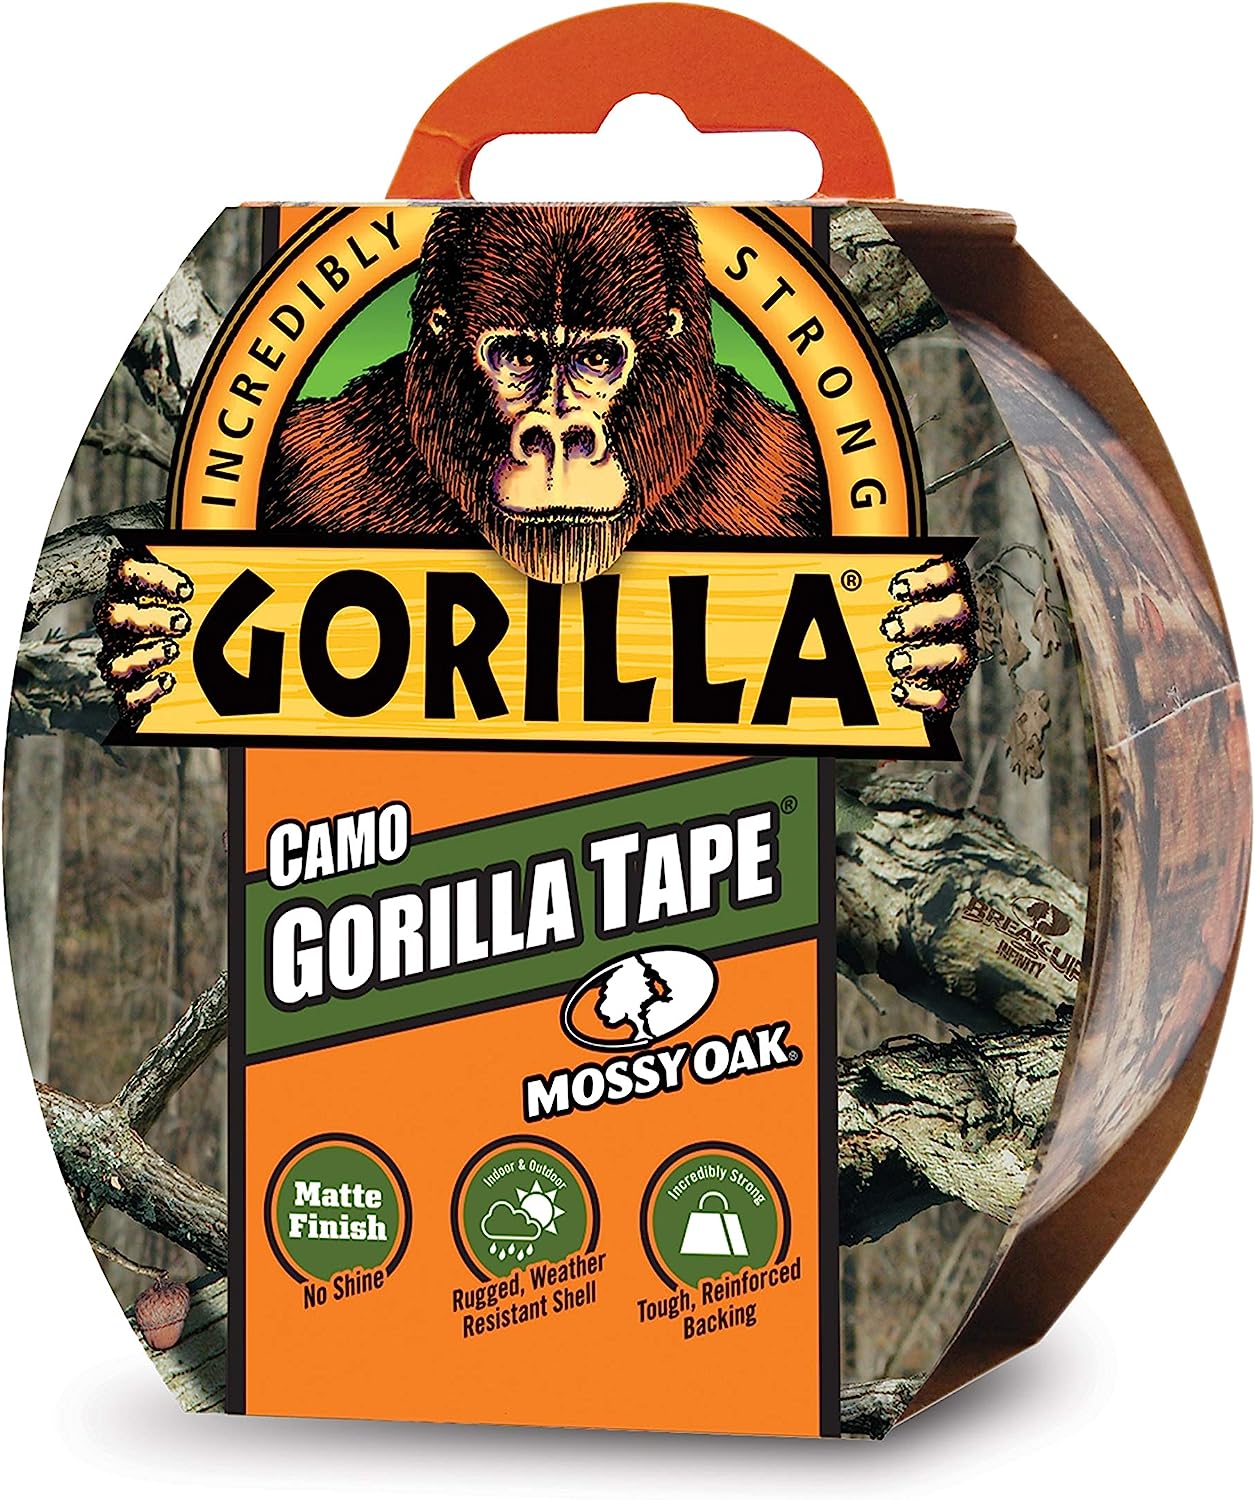 Gorilla Mossy Oak Camo Tape [48mm x 8m]